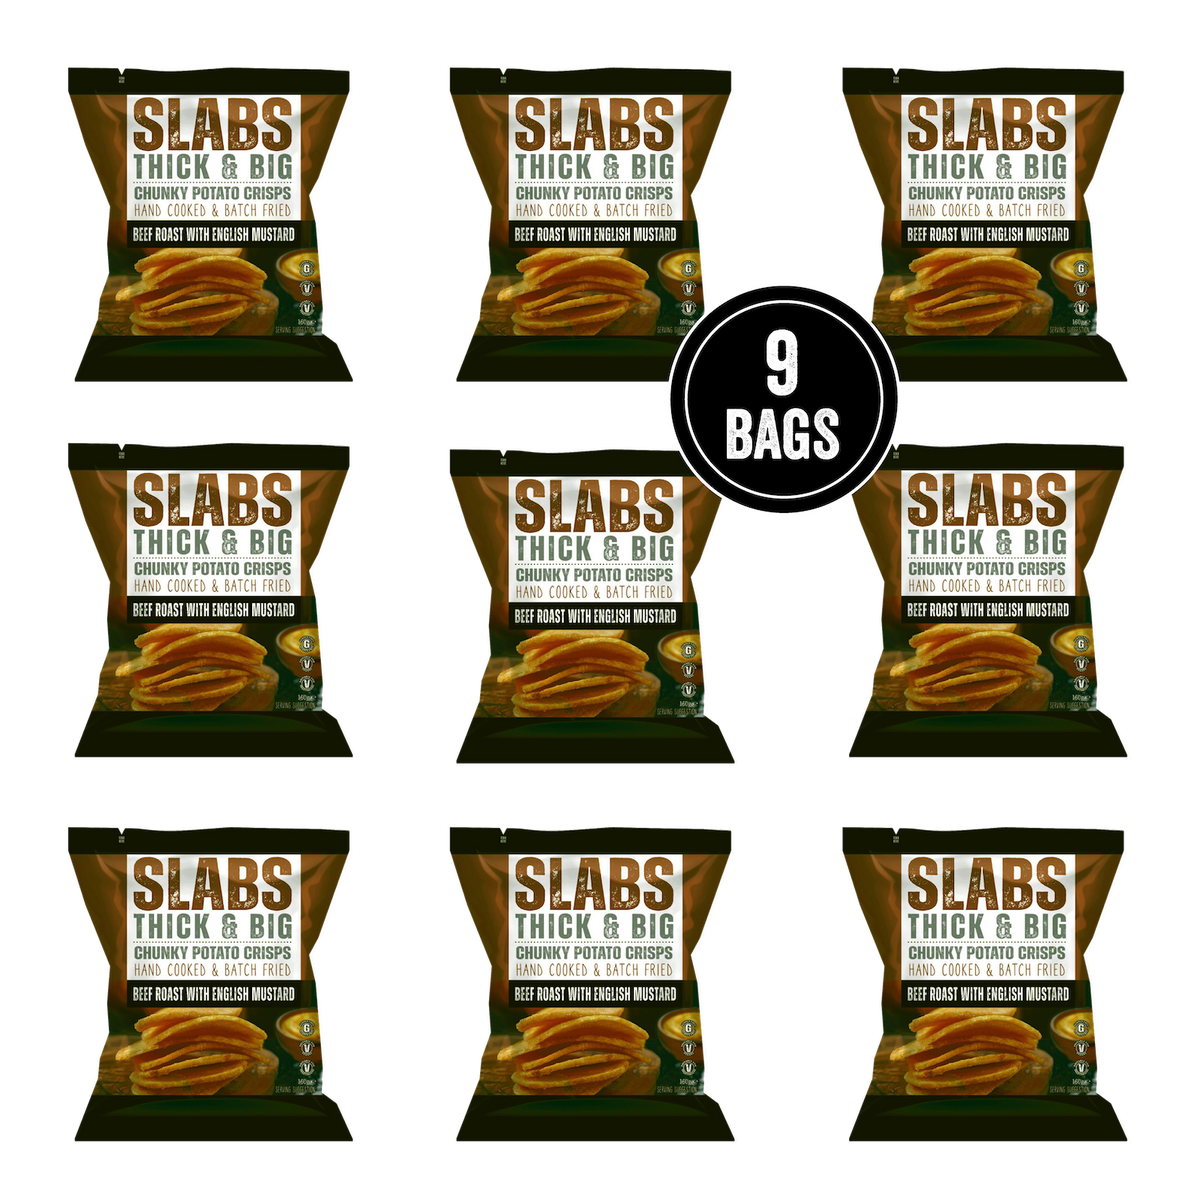 SLABS BEEF ROAST & ENGLISH MUSTARD 160g (5.6oz) mega box of 9 bags